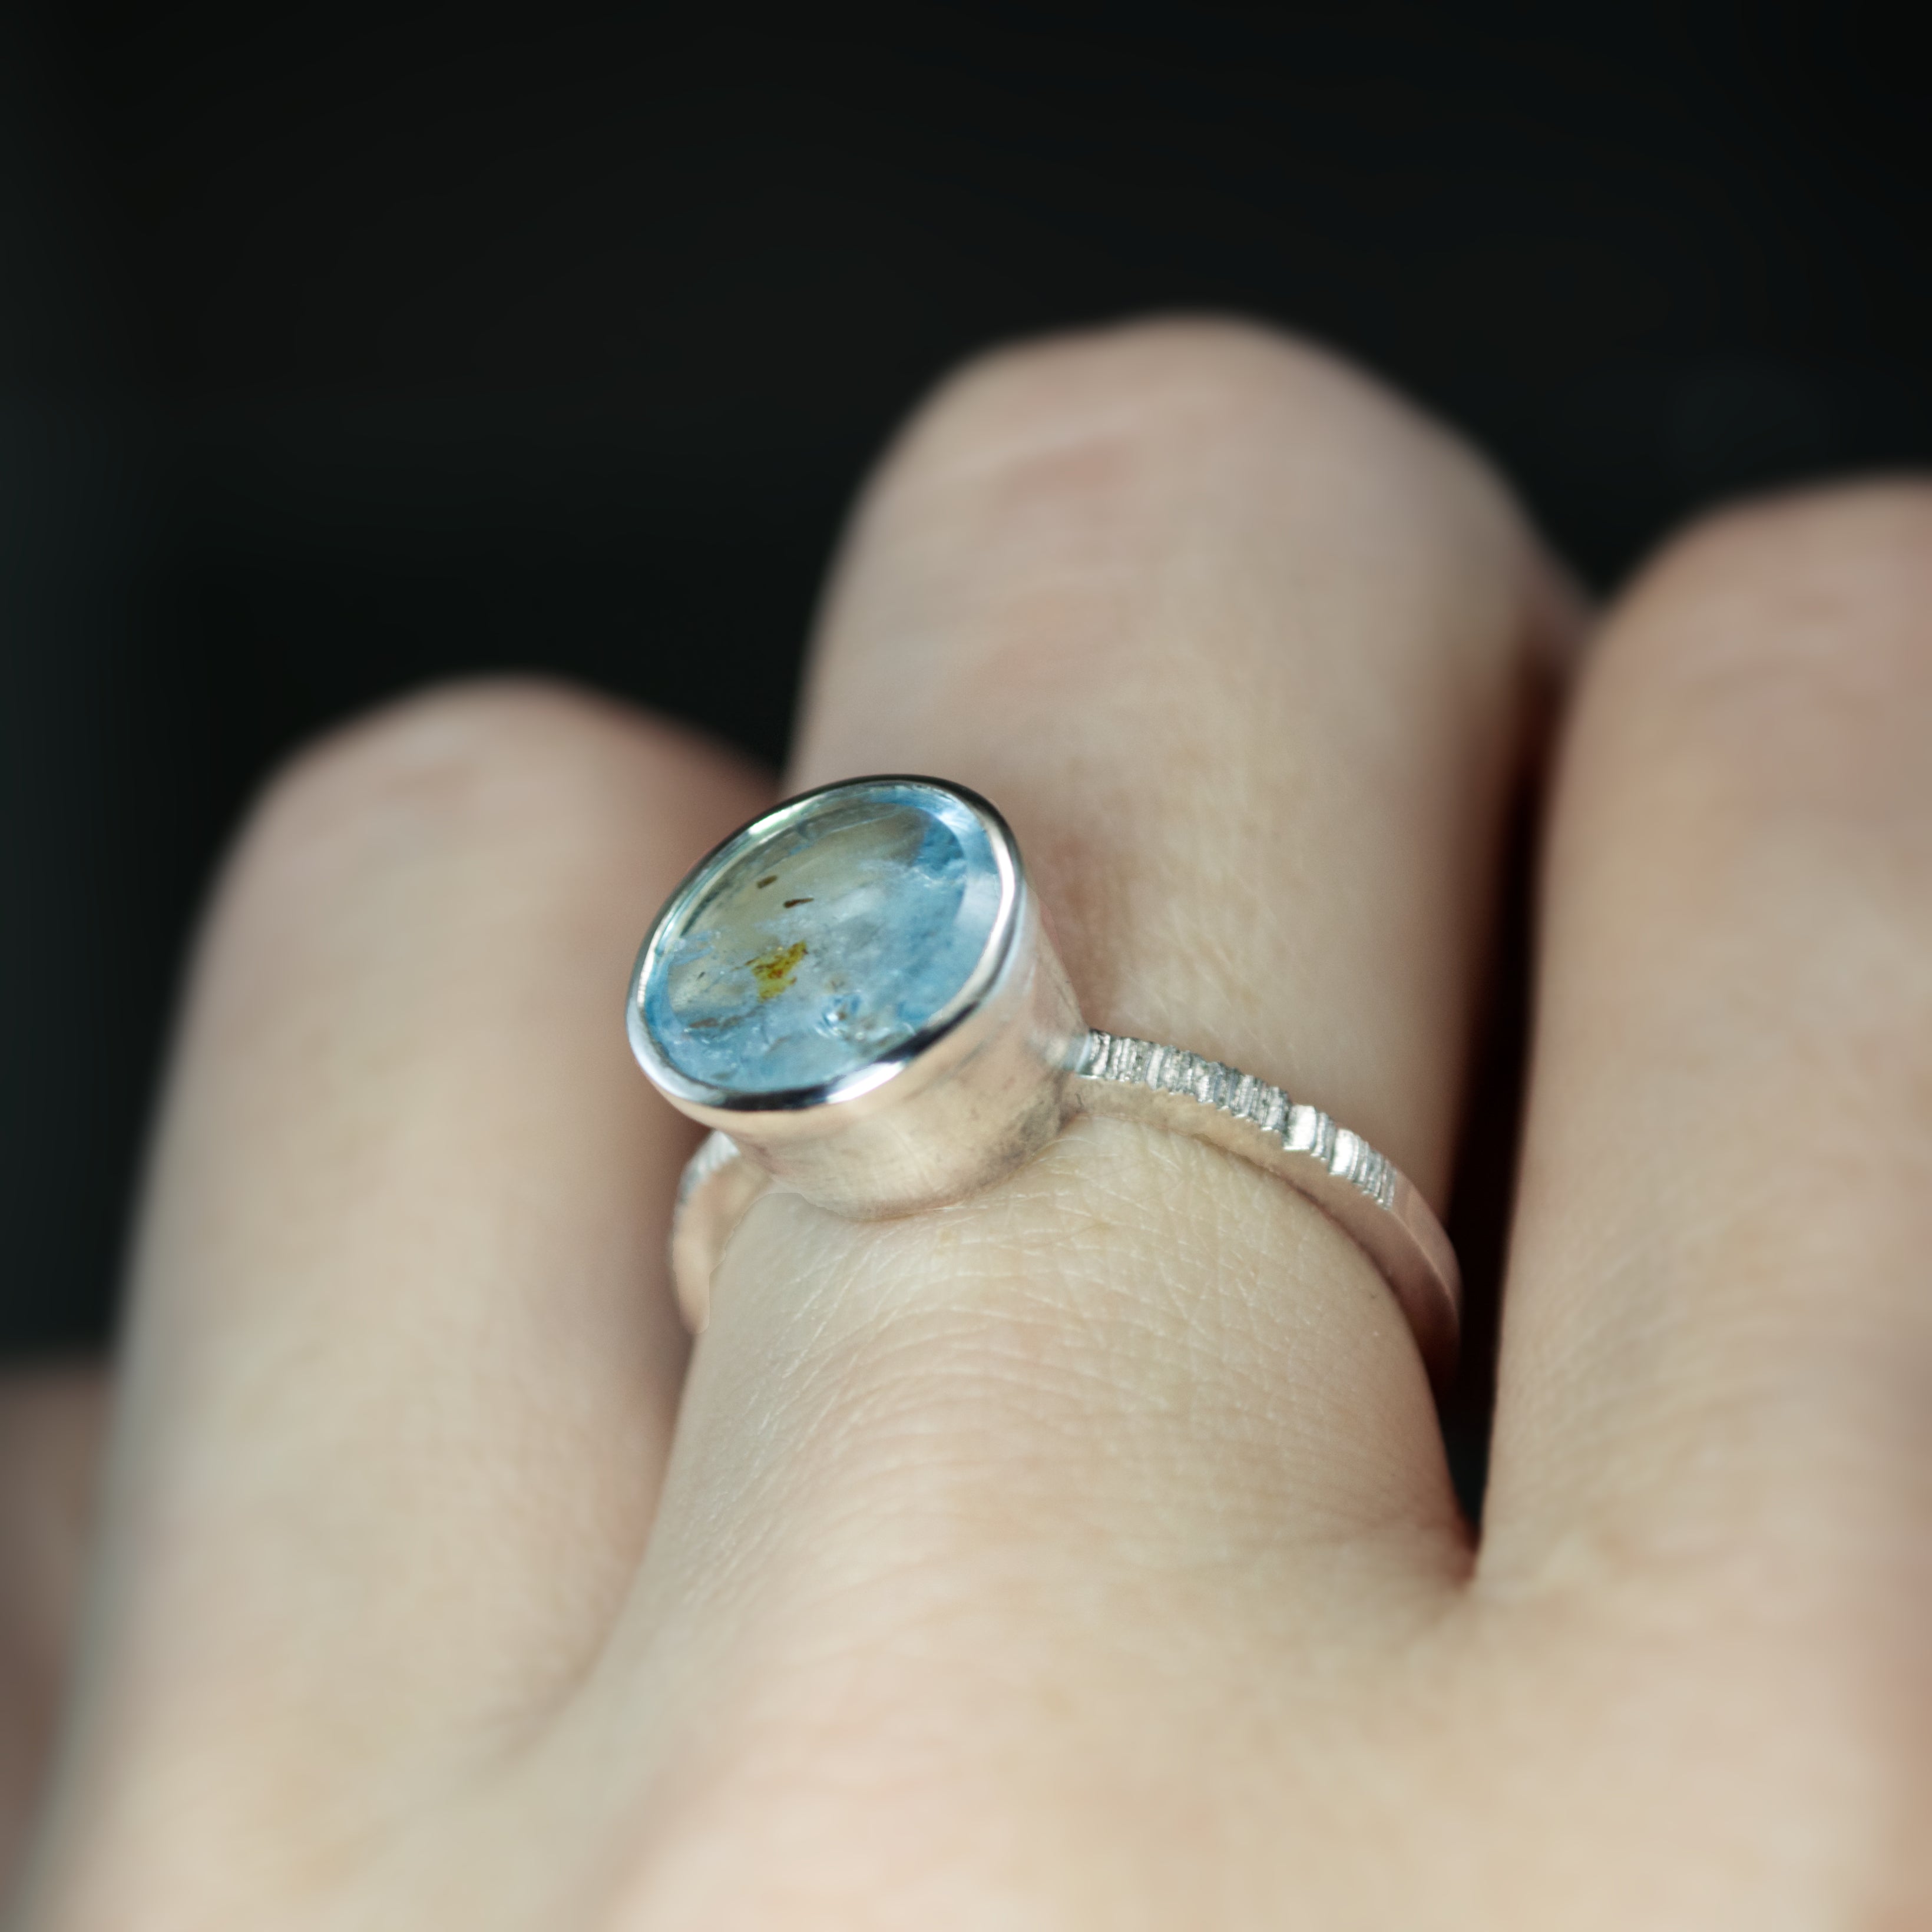 Aquamarine Coined Ring - Size 7